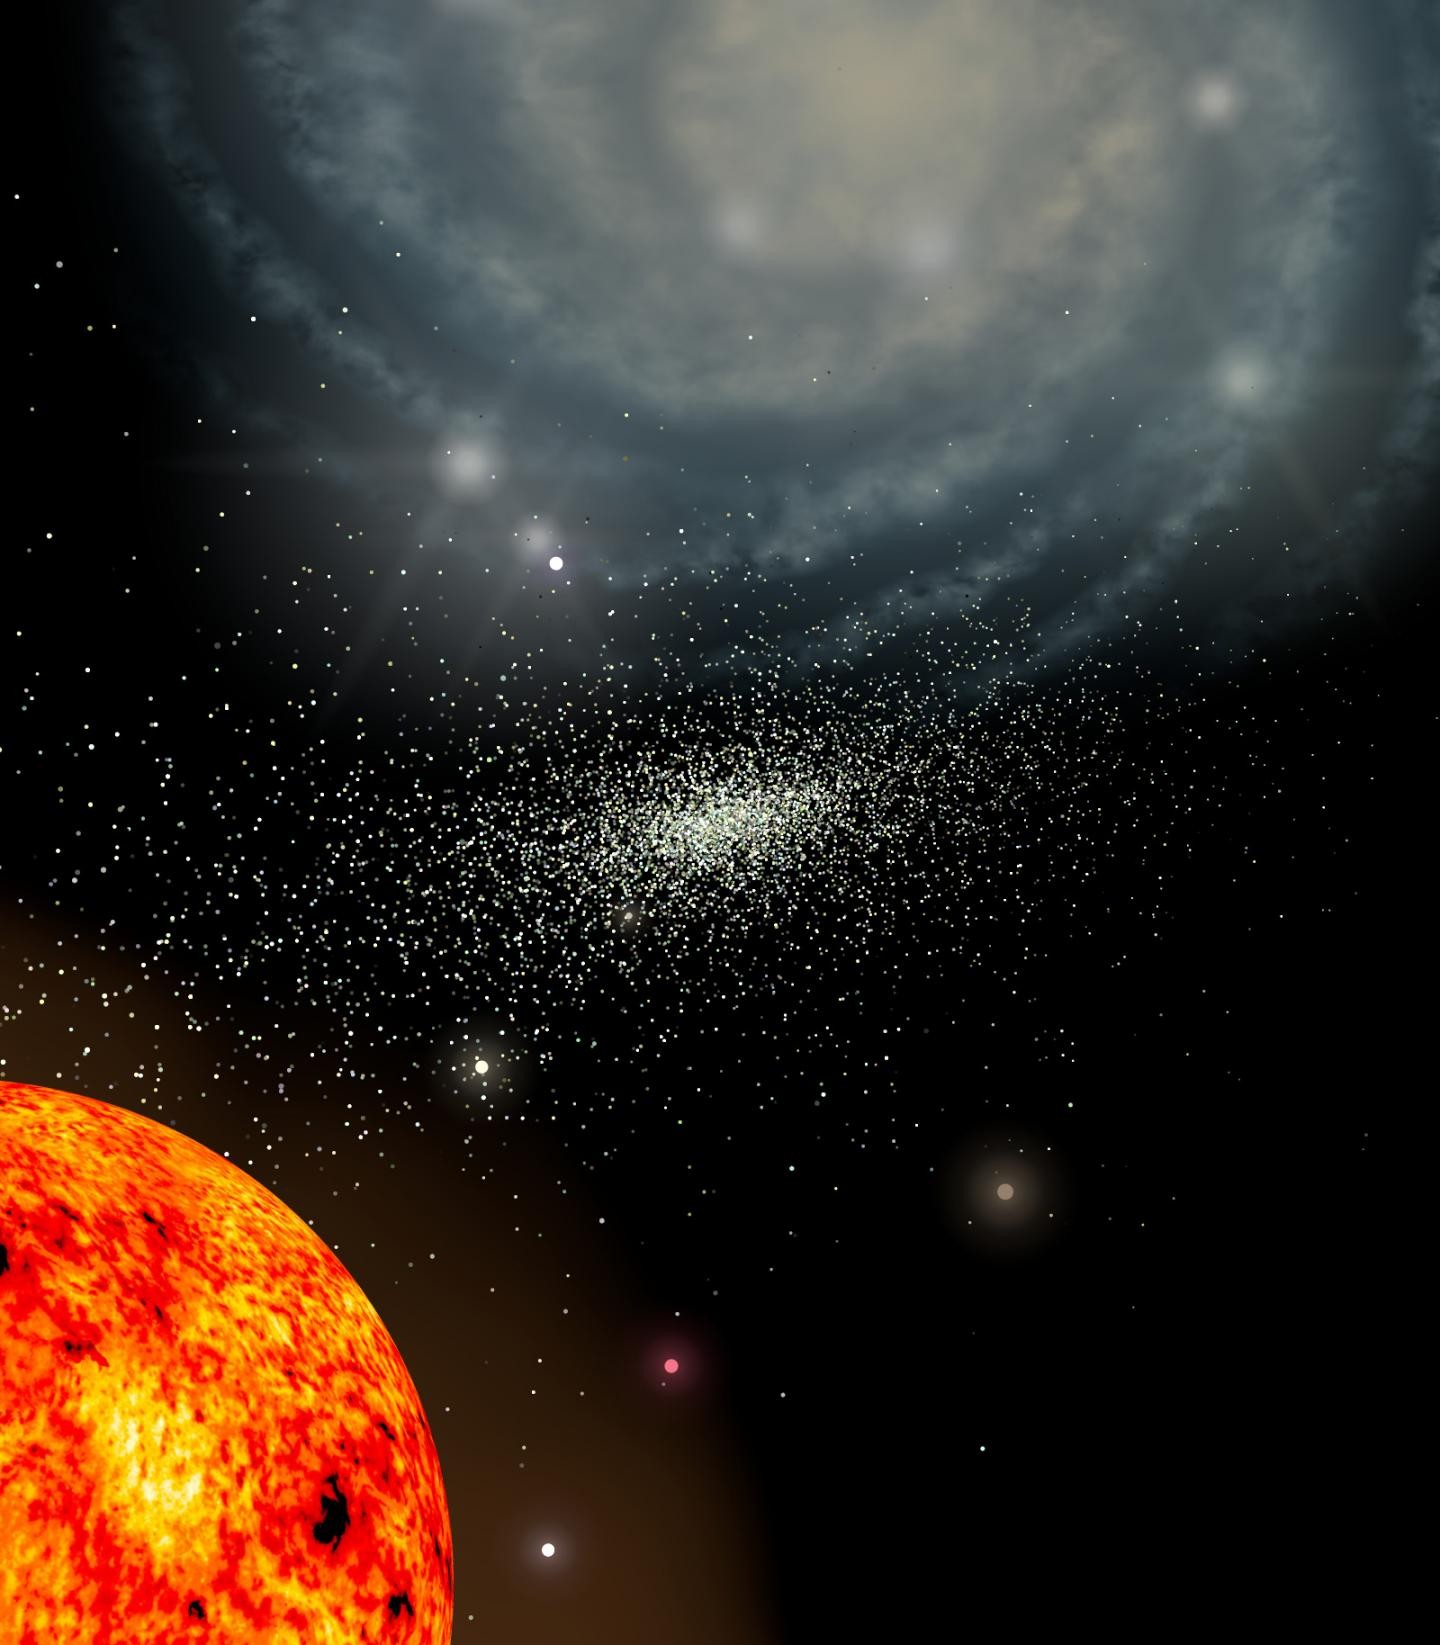 Novo tipo de aglomerado de estrelas é descoberto na Via Láctea (Foto: Geraint F. Lewis and the S5 collaboration)